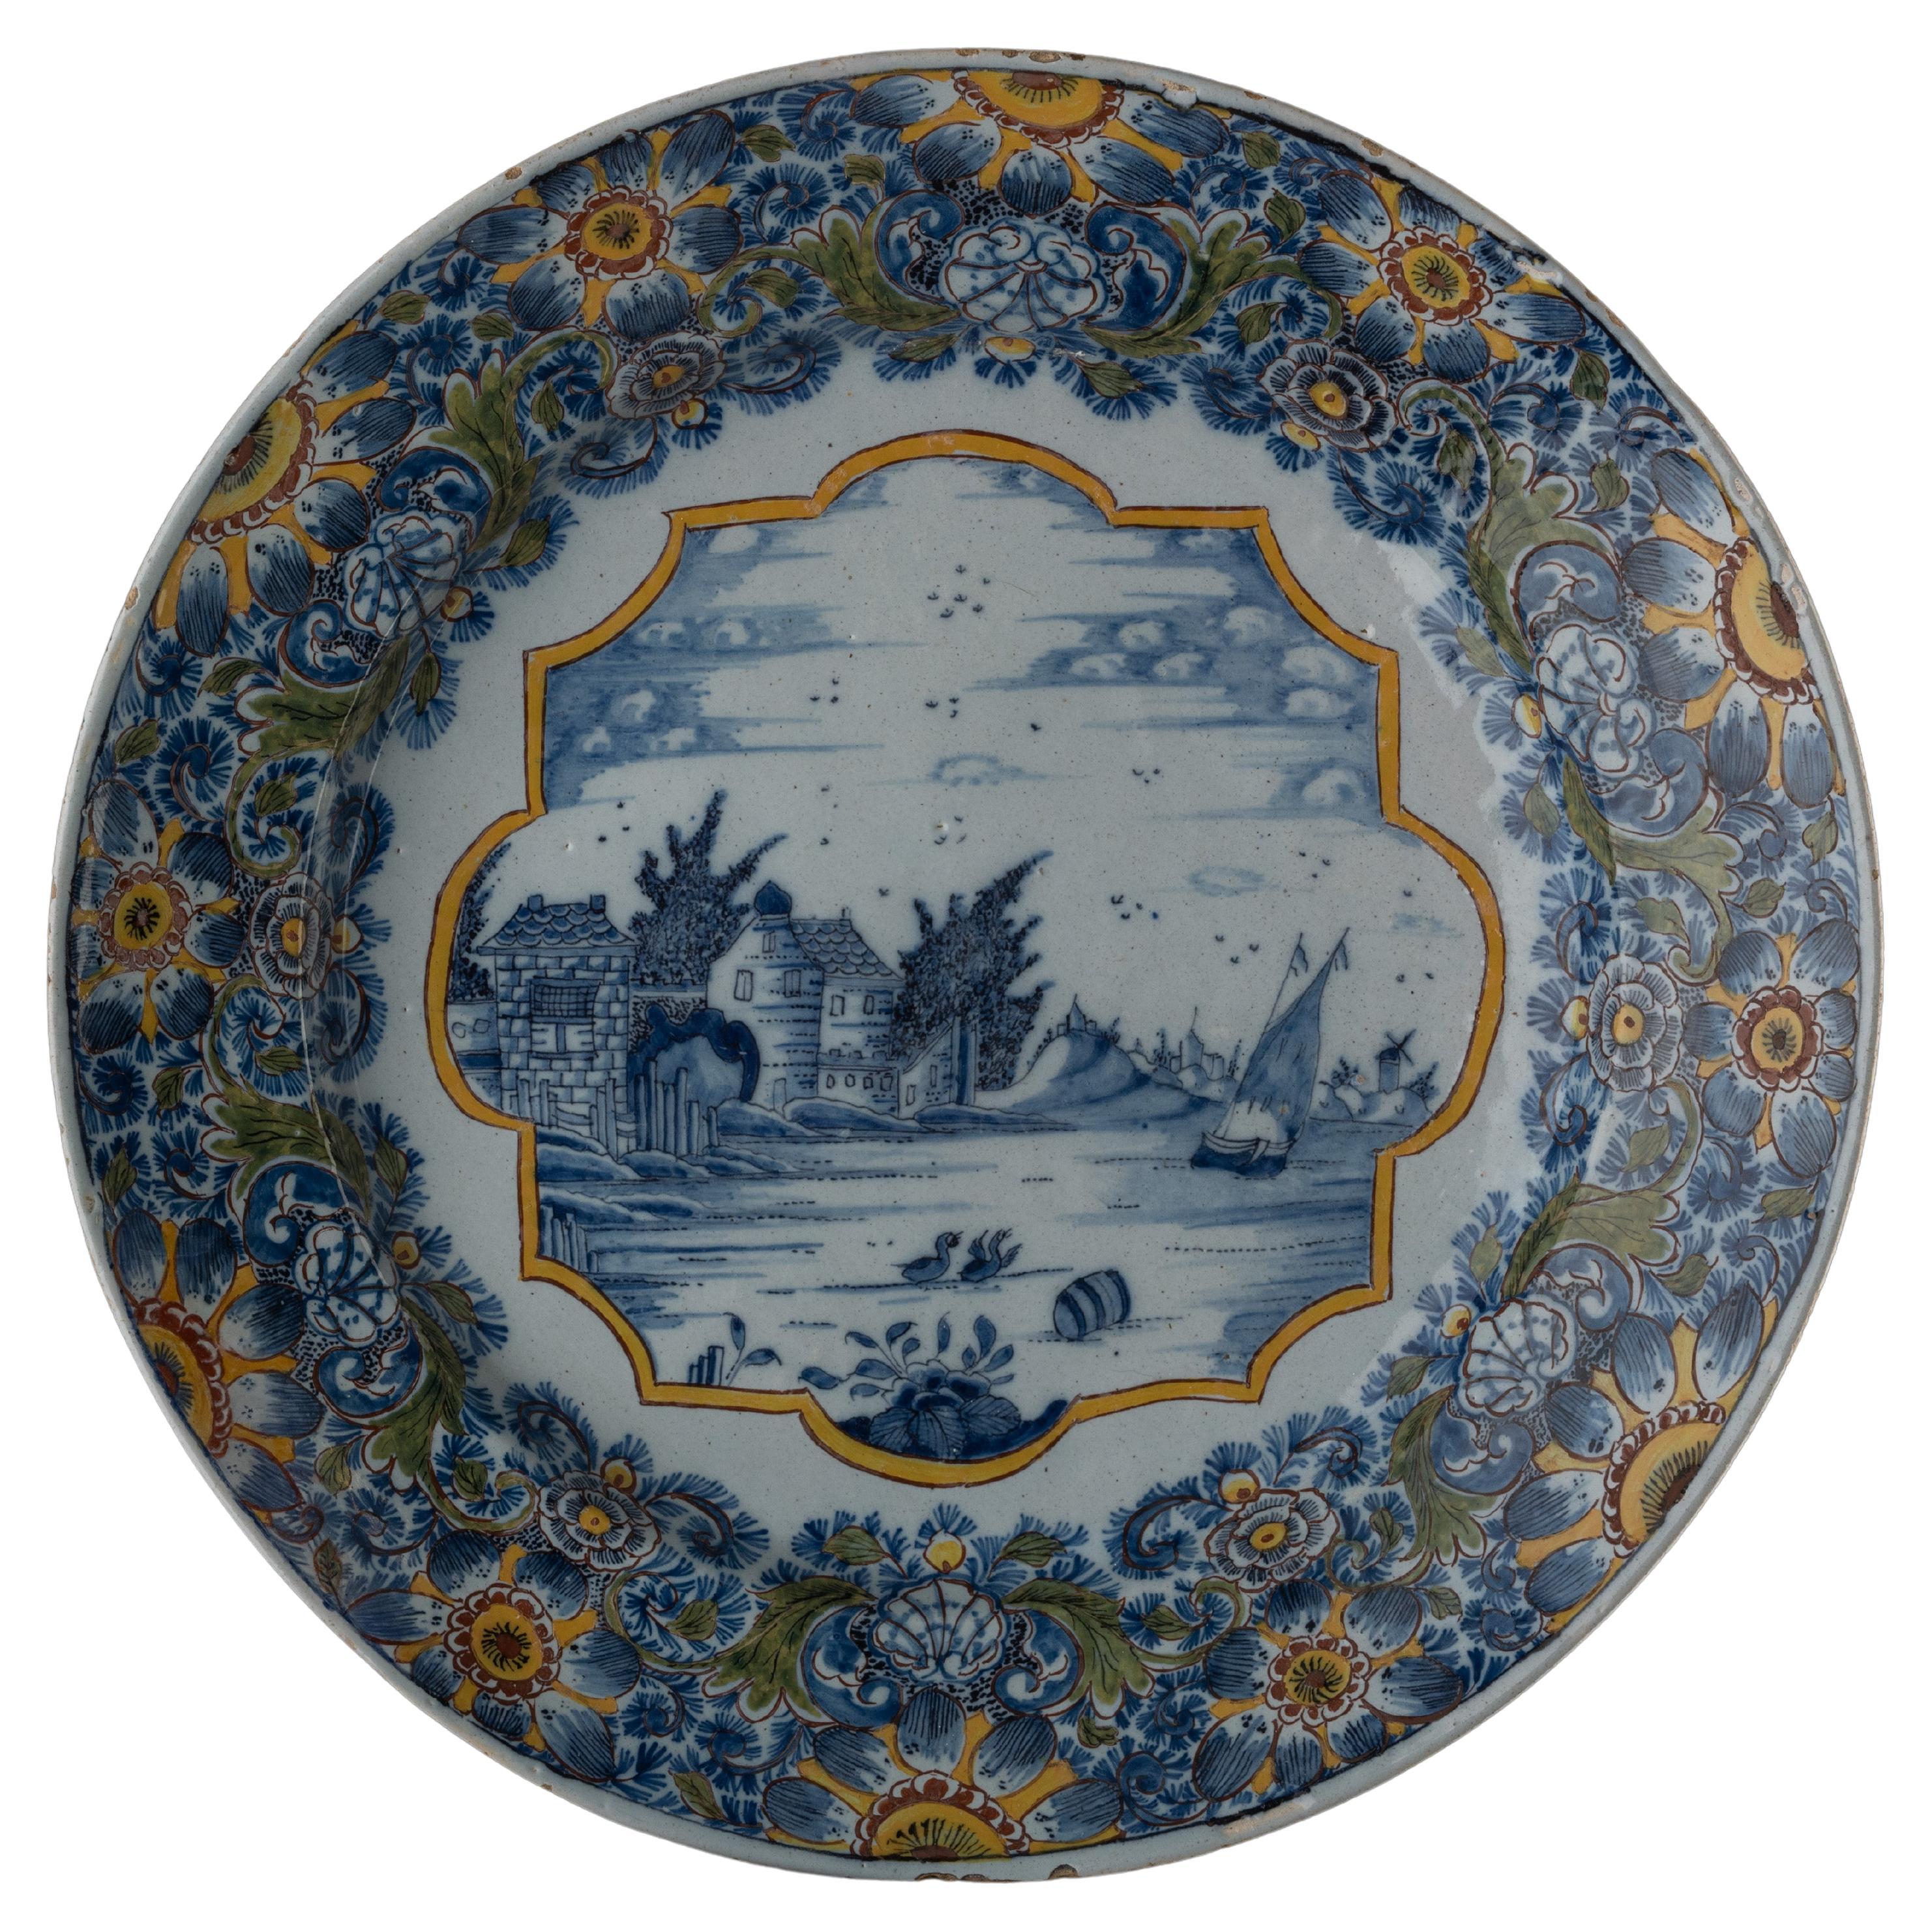 Grand plat avec un paysage aquatique néerlandais de Delft, 1760-1780